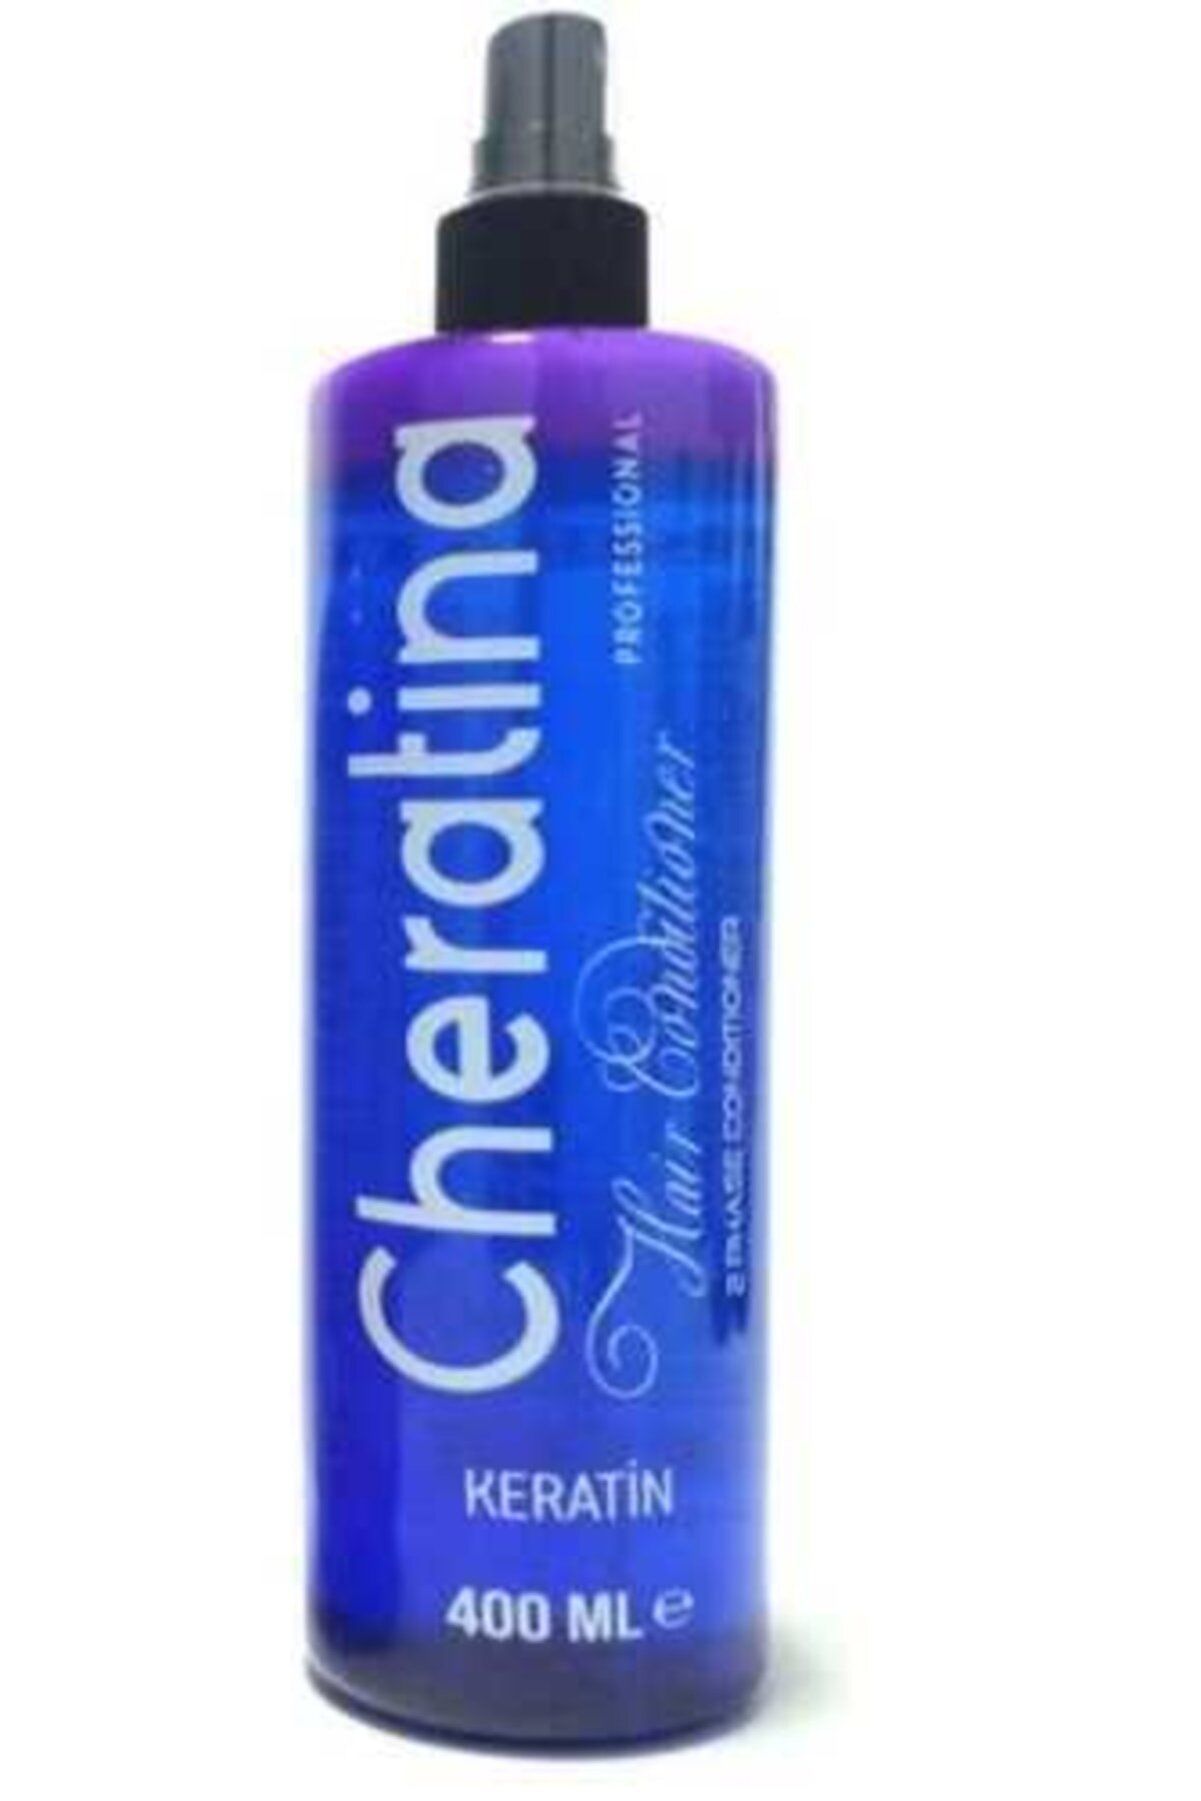 Cheratina Keratinli Fön Suyu - Hair Conditioner 400 ml